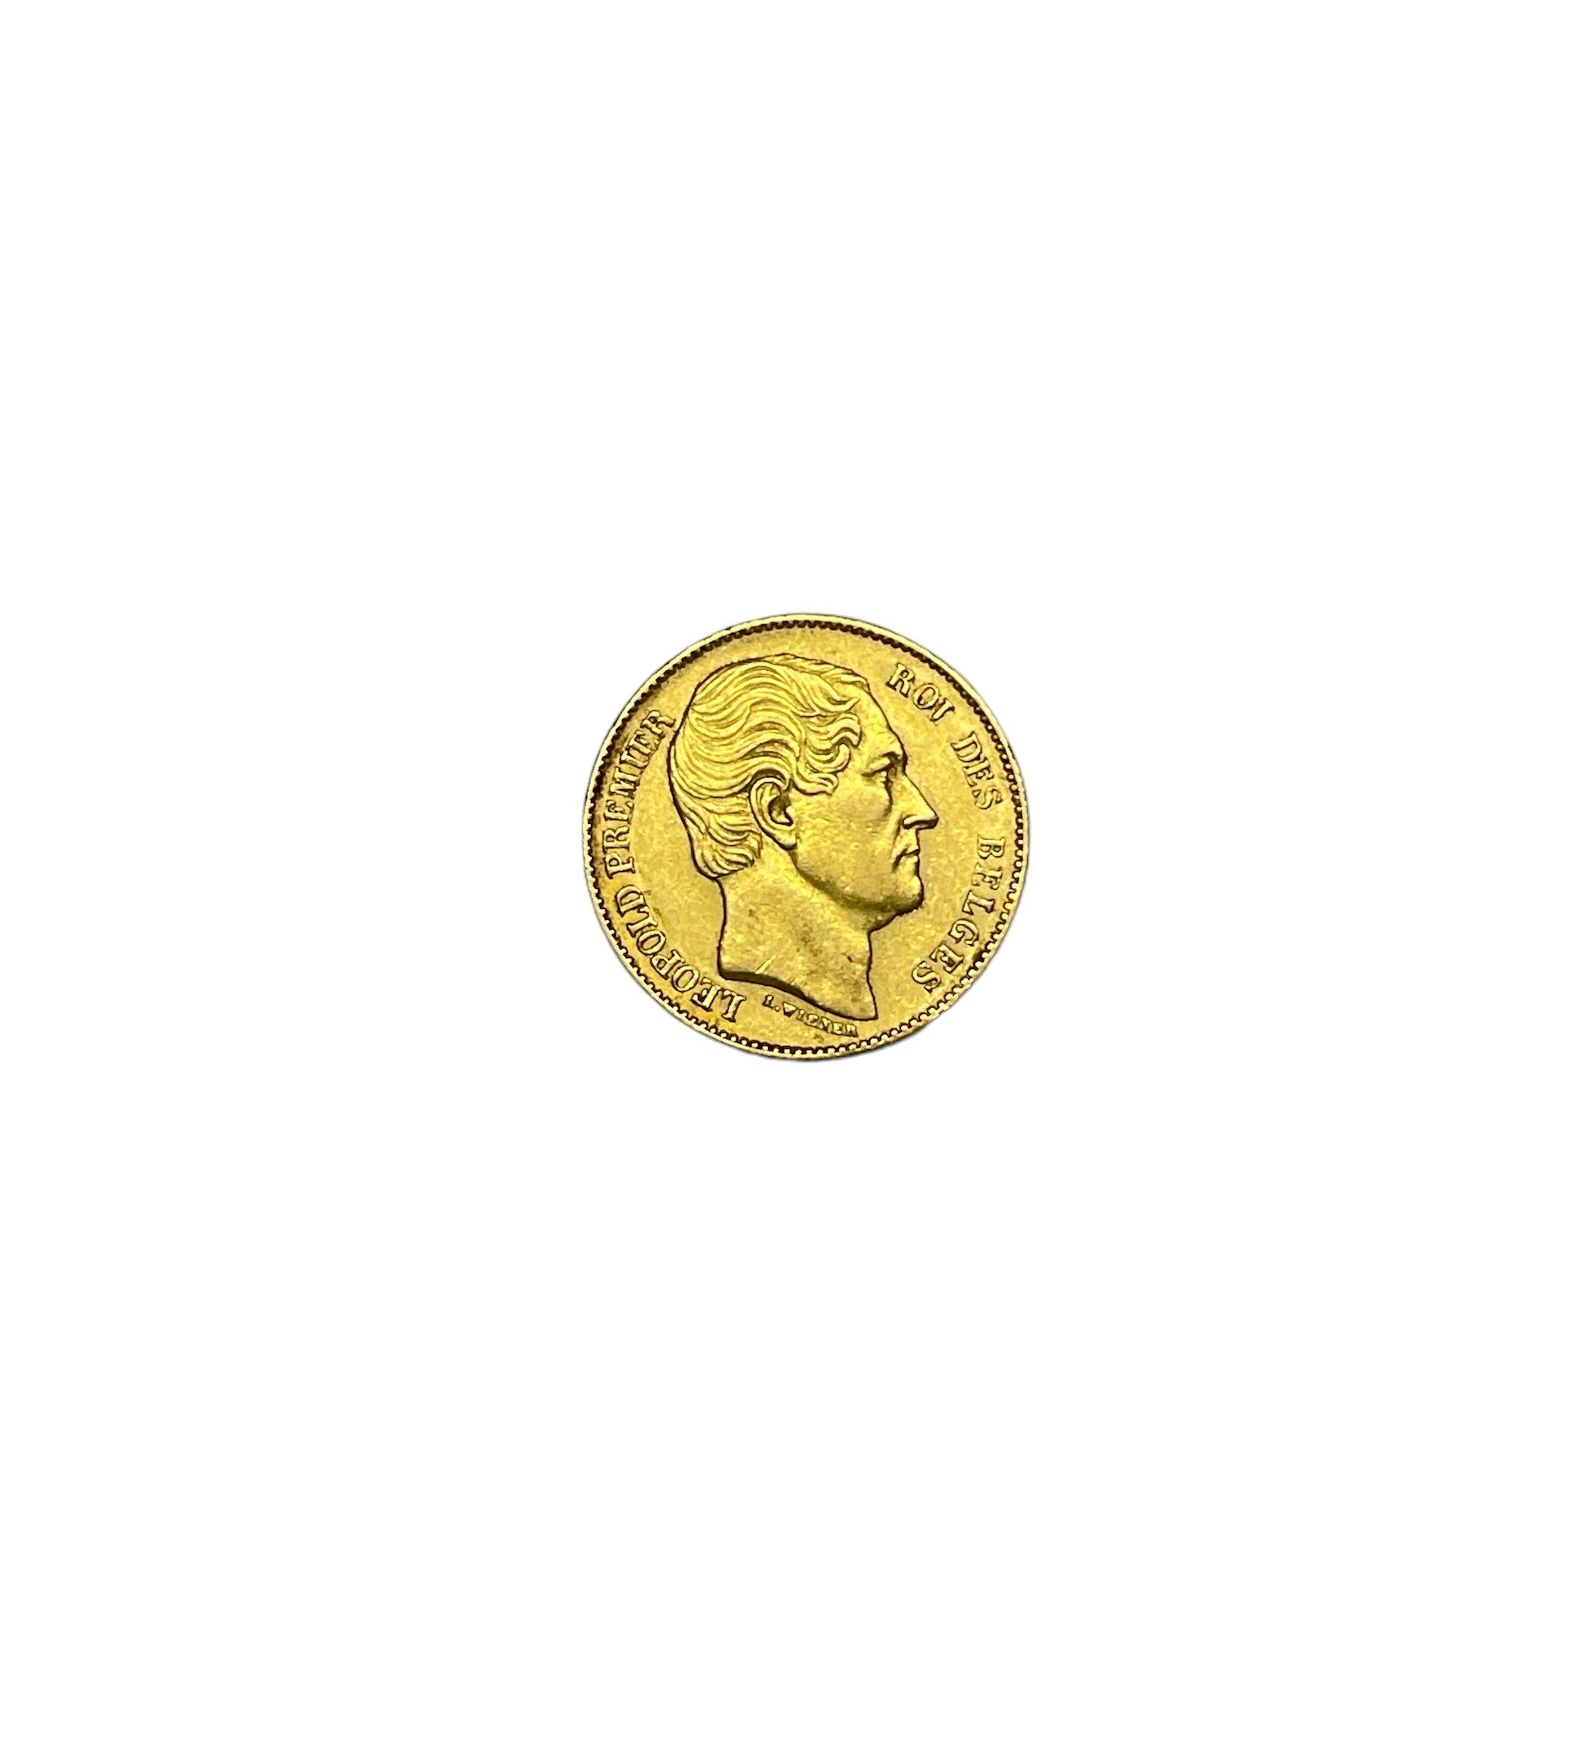 Null FRANCIA
20 franchi oro 1865
Peso: 6 g